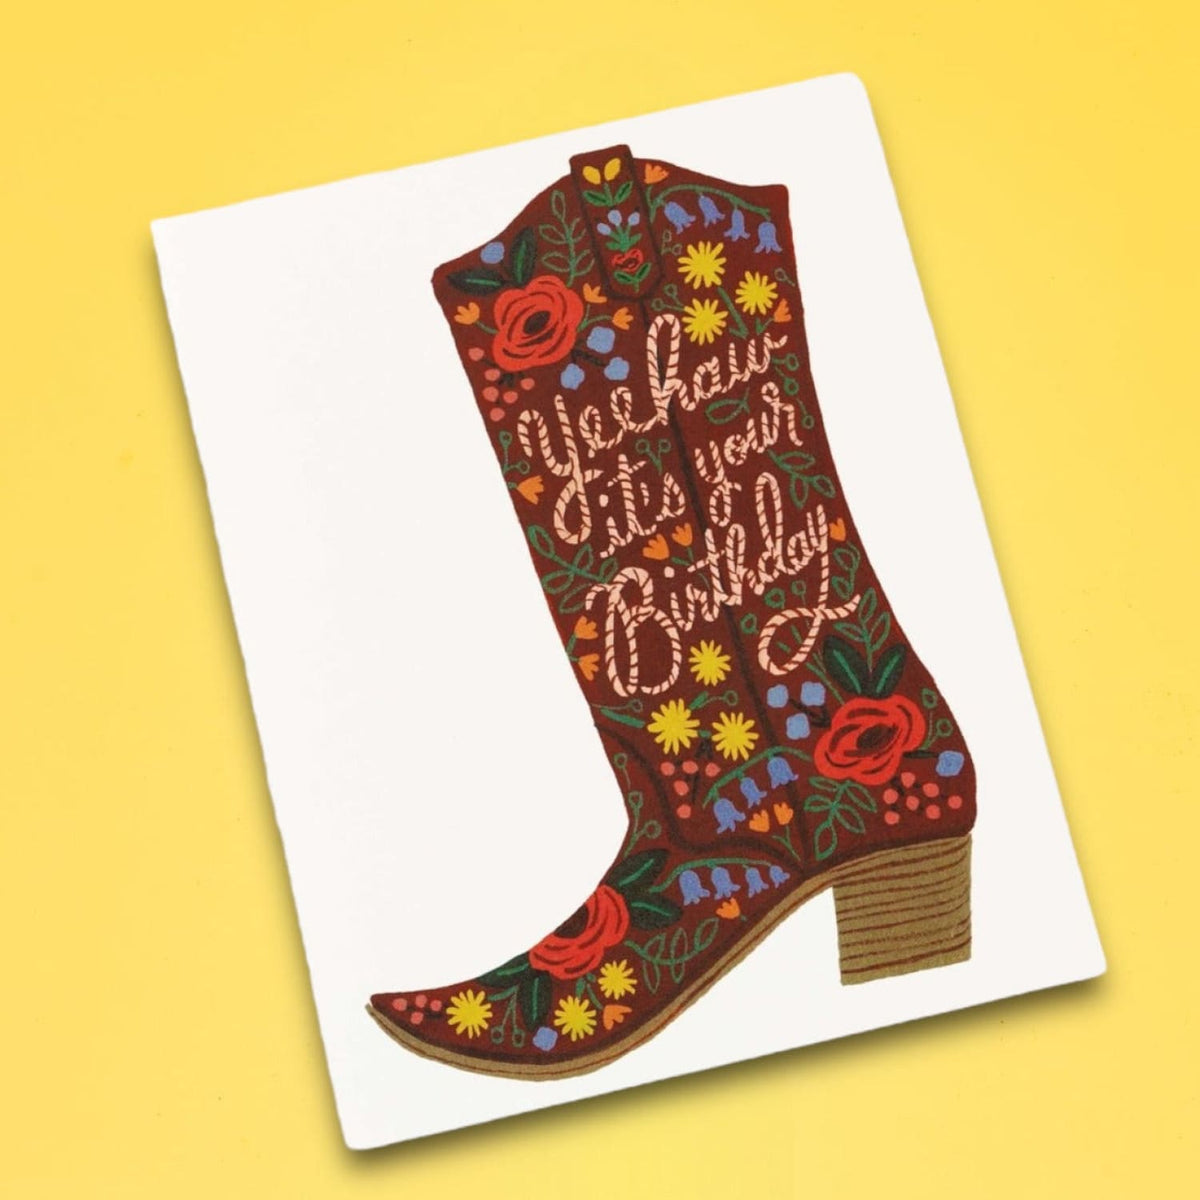 Yeehaw Cowboy Boot Birthday Greeting Card - Gifts Happy